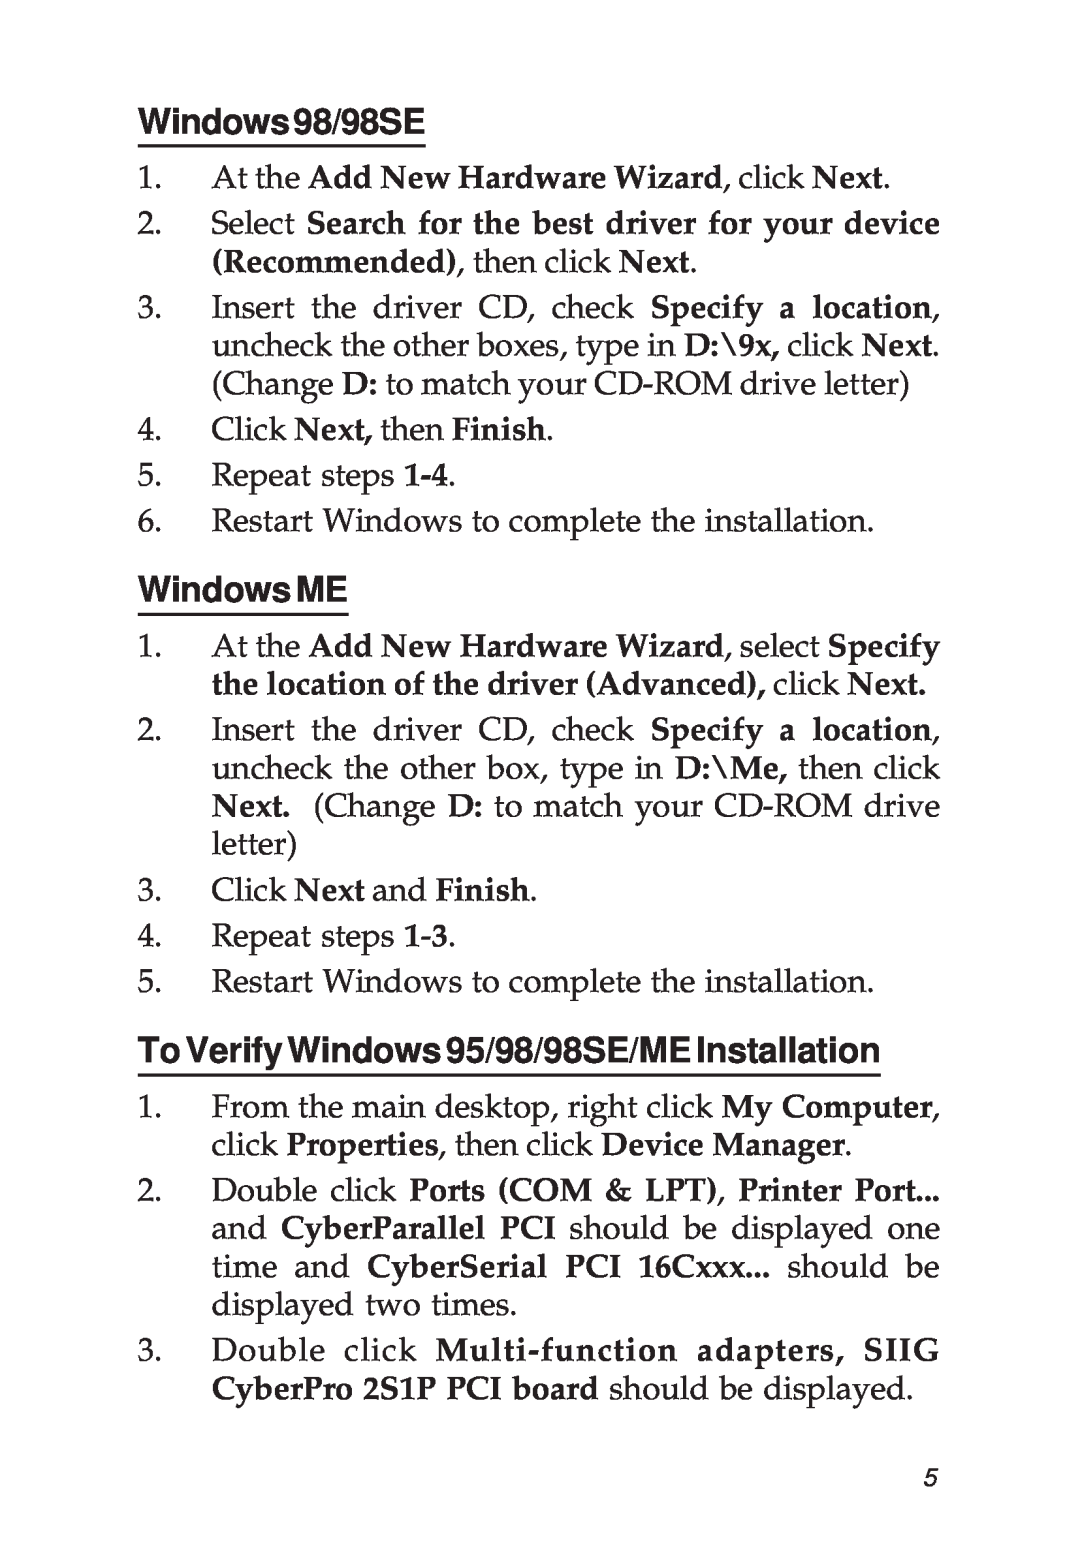 SIIG 2S1P manual Windows98/98SE, Windows ME, To Verify Windows 95/98/98SE/ME Installation 